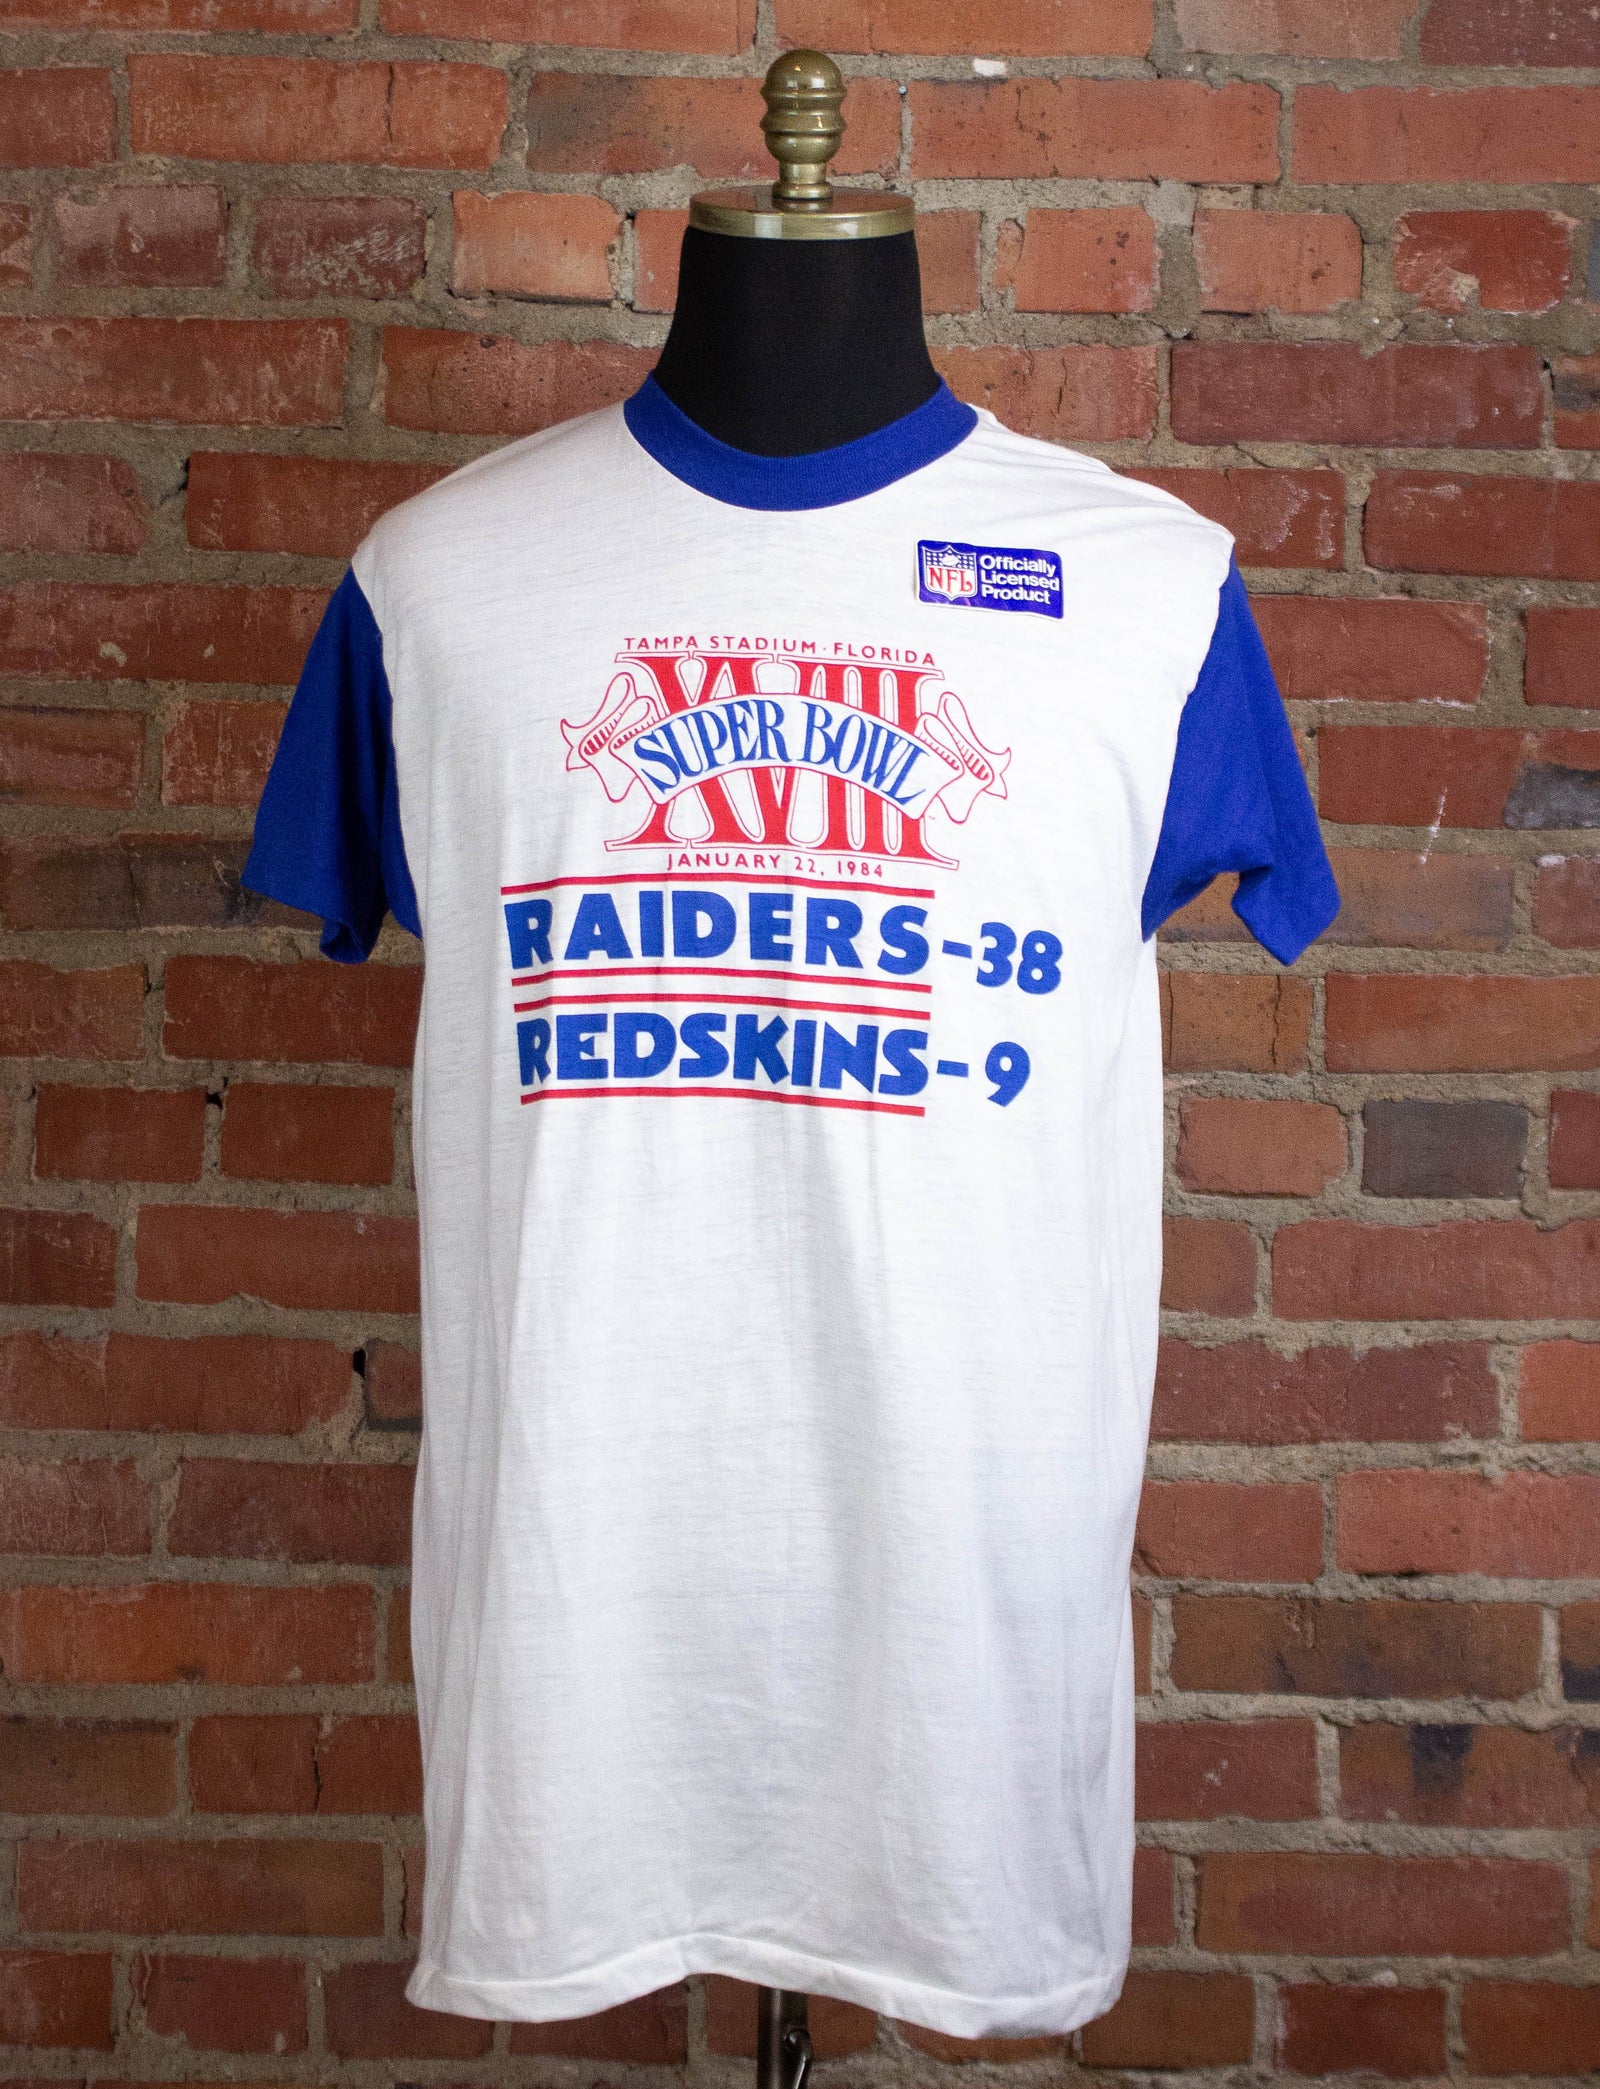 Vintage Super Bowl XVIII Deadstock Ringer Graphic T Shirt 1984 White a –  Black Shag Vintage